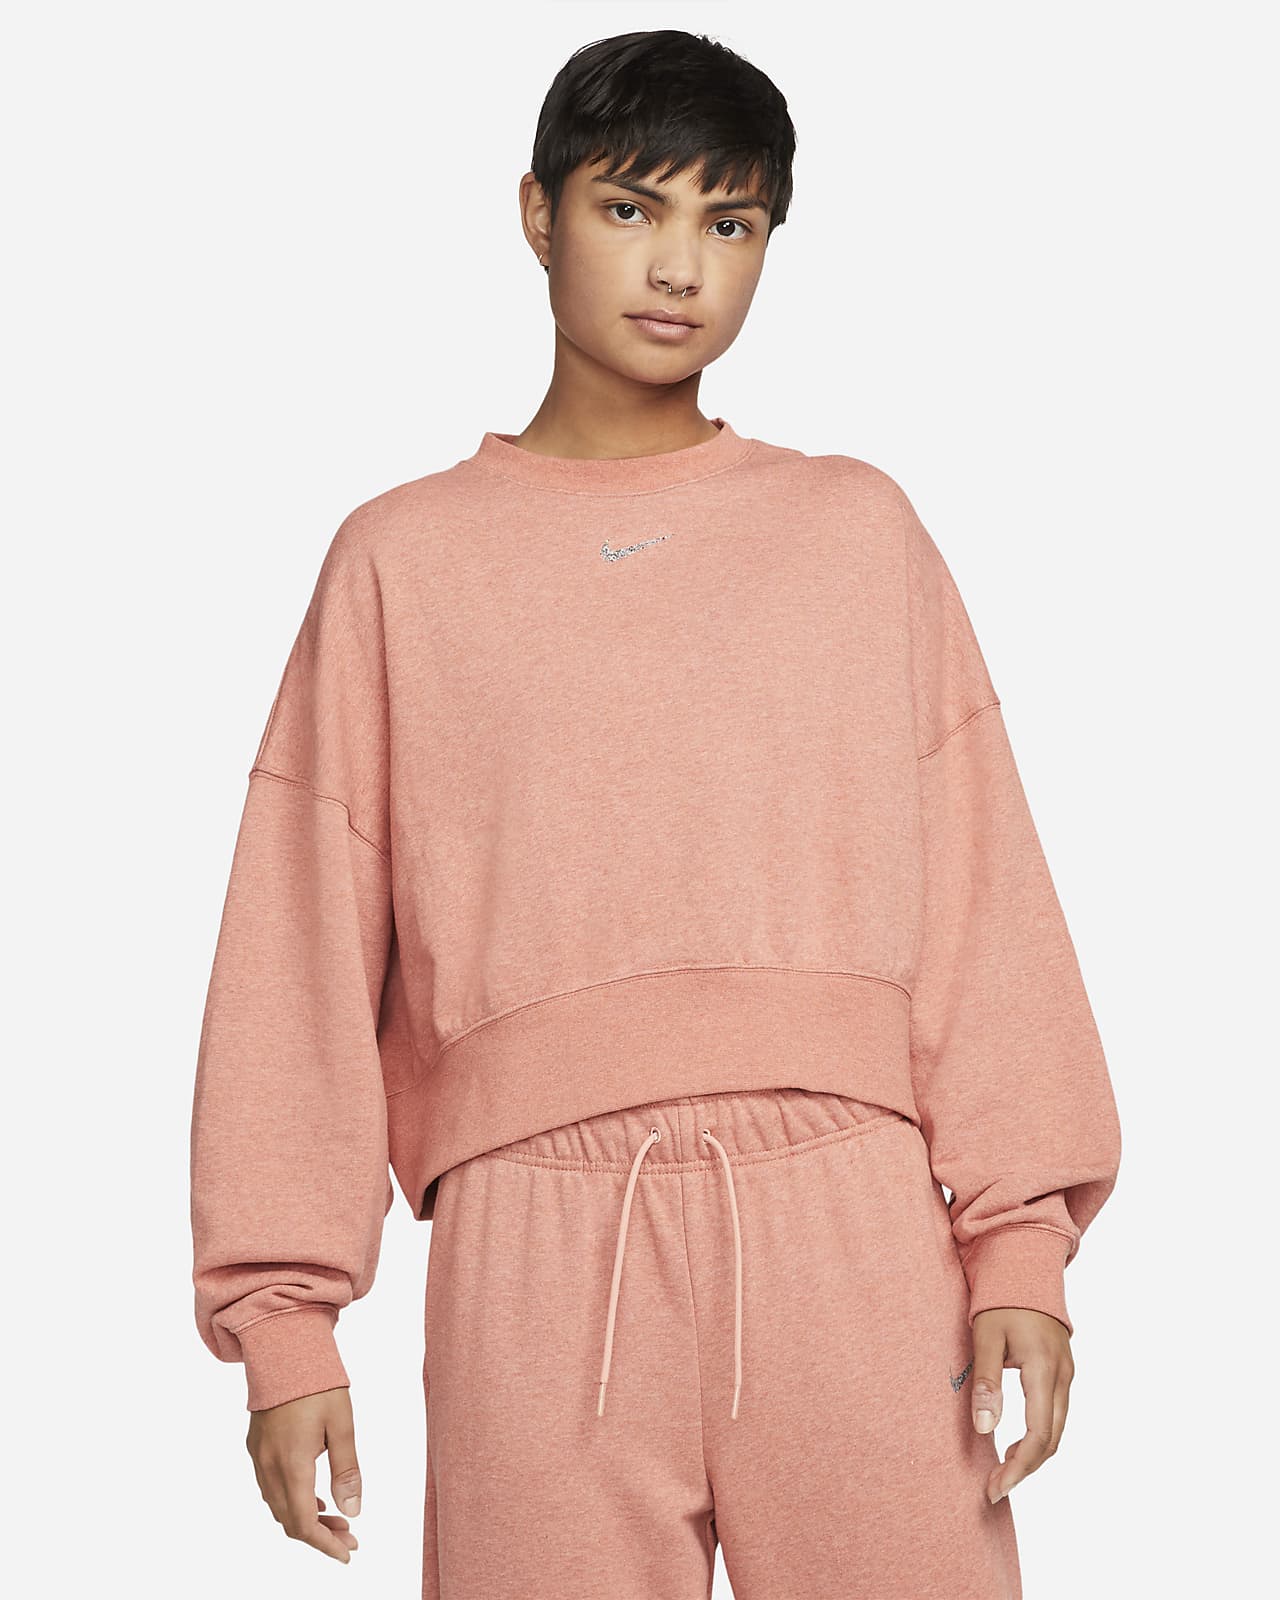 Nike Sportswear Collection Essentials Women's Oversized Fleece Crew